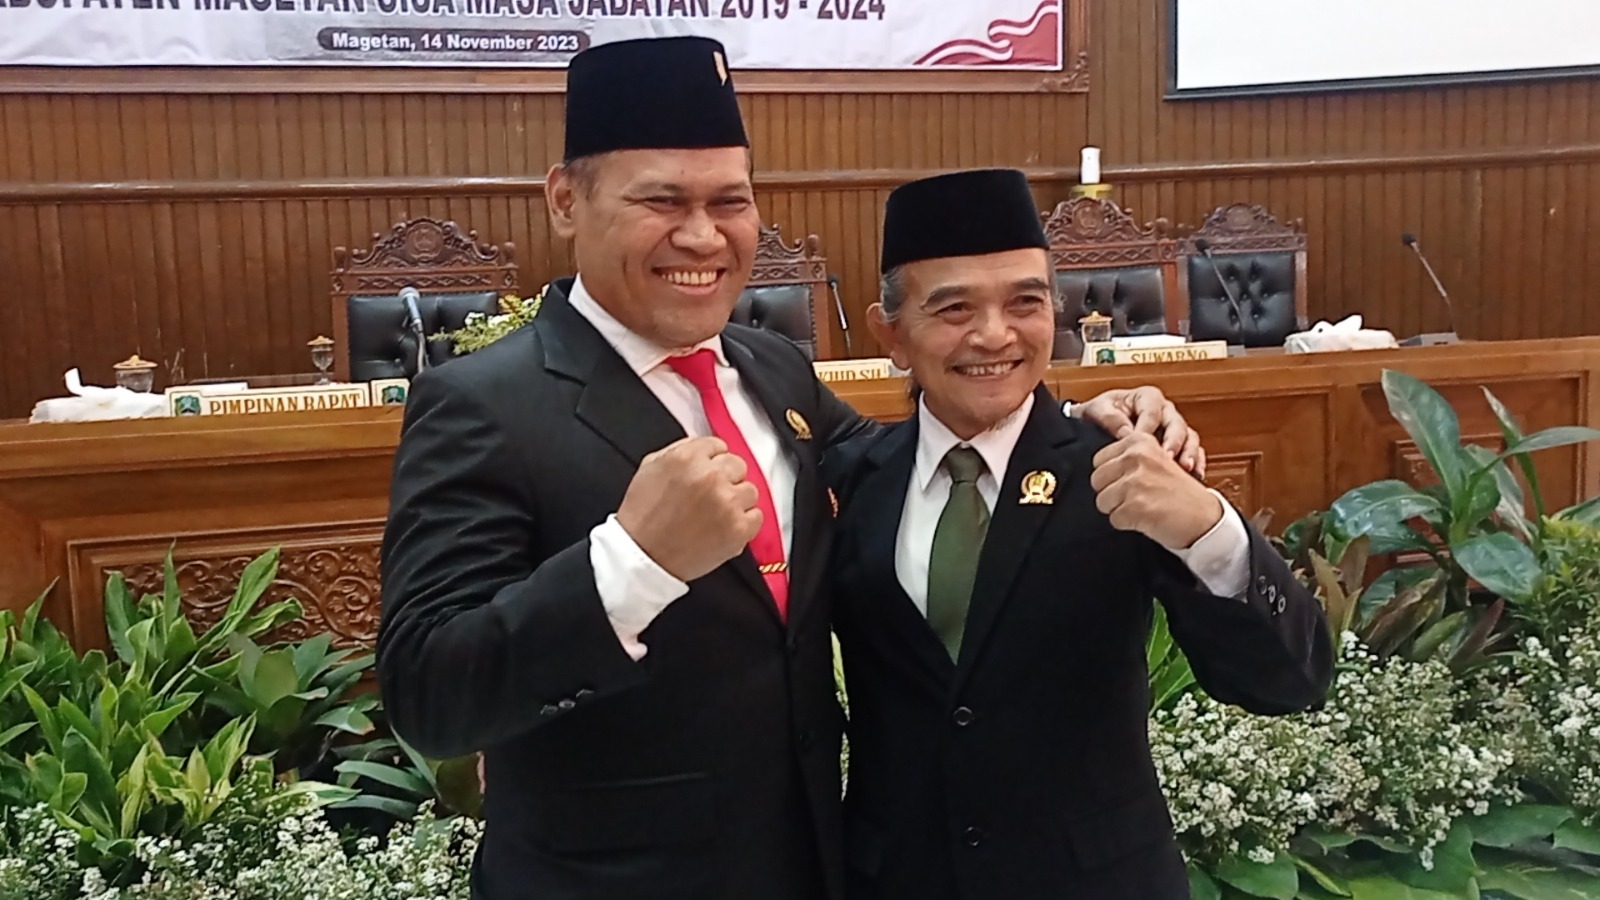 DPRD Magetan Gelar PAW Anggota DPRD PPP R Bustomi Jauhari Menggantikan Rama yang Mengundurkan Diri.